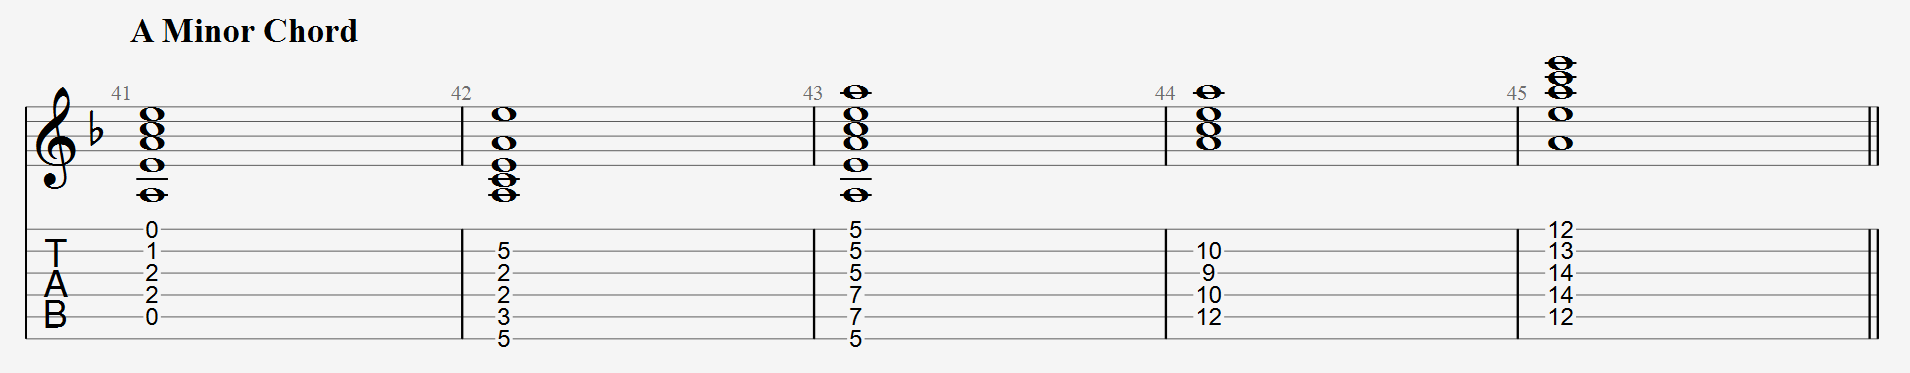 A minor chord shapes